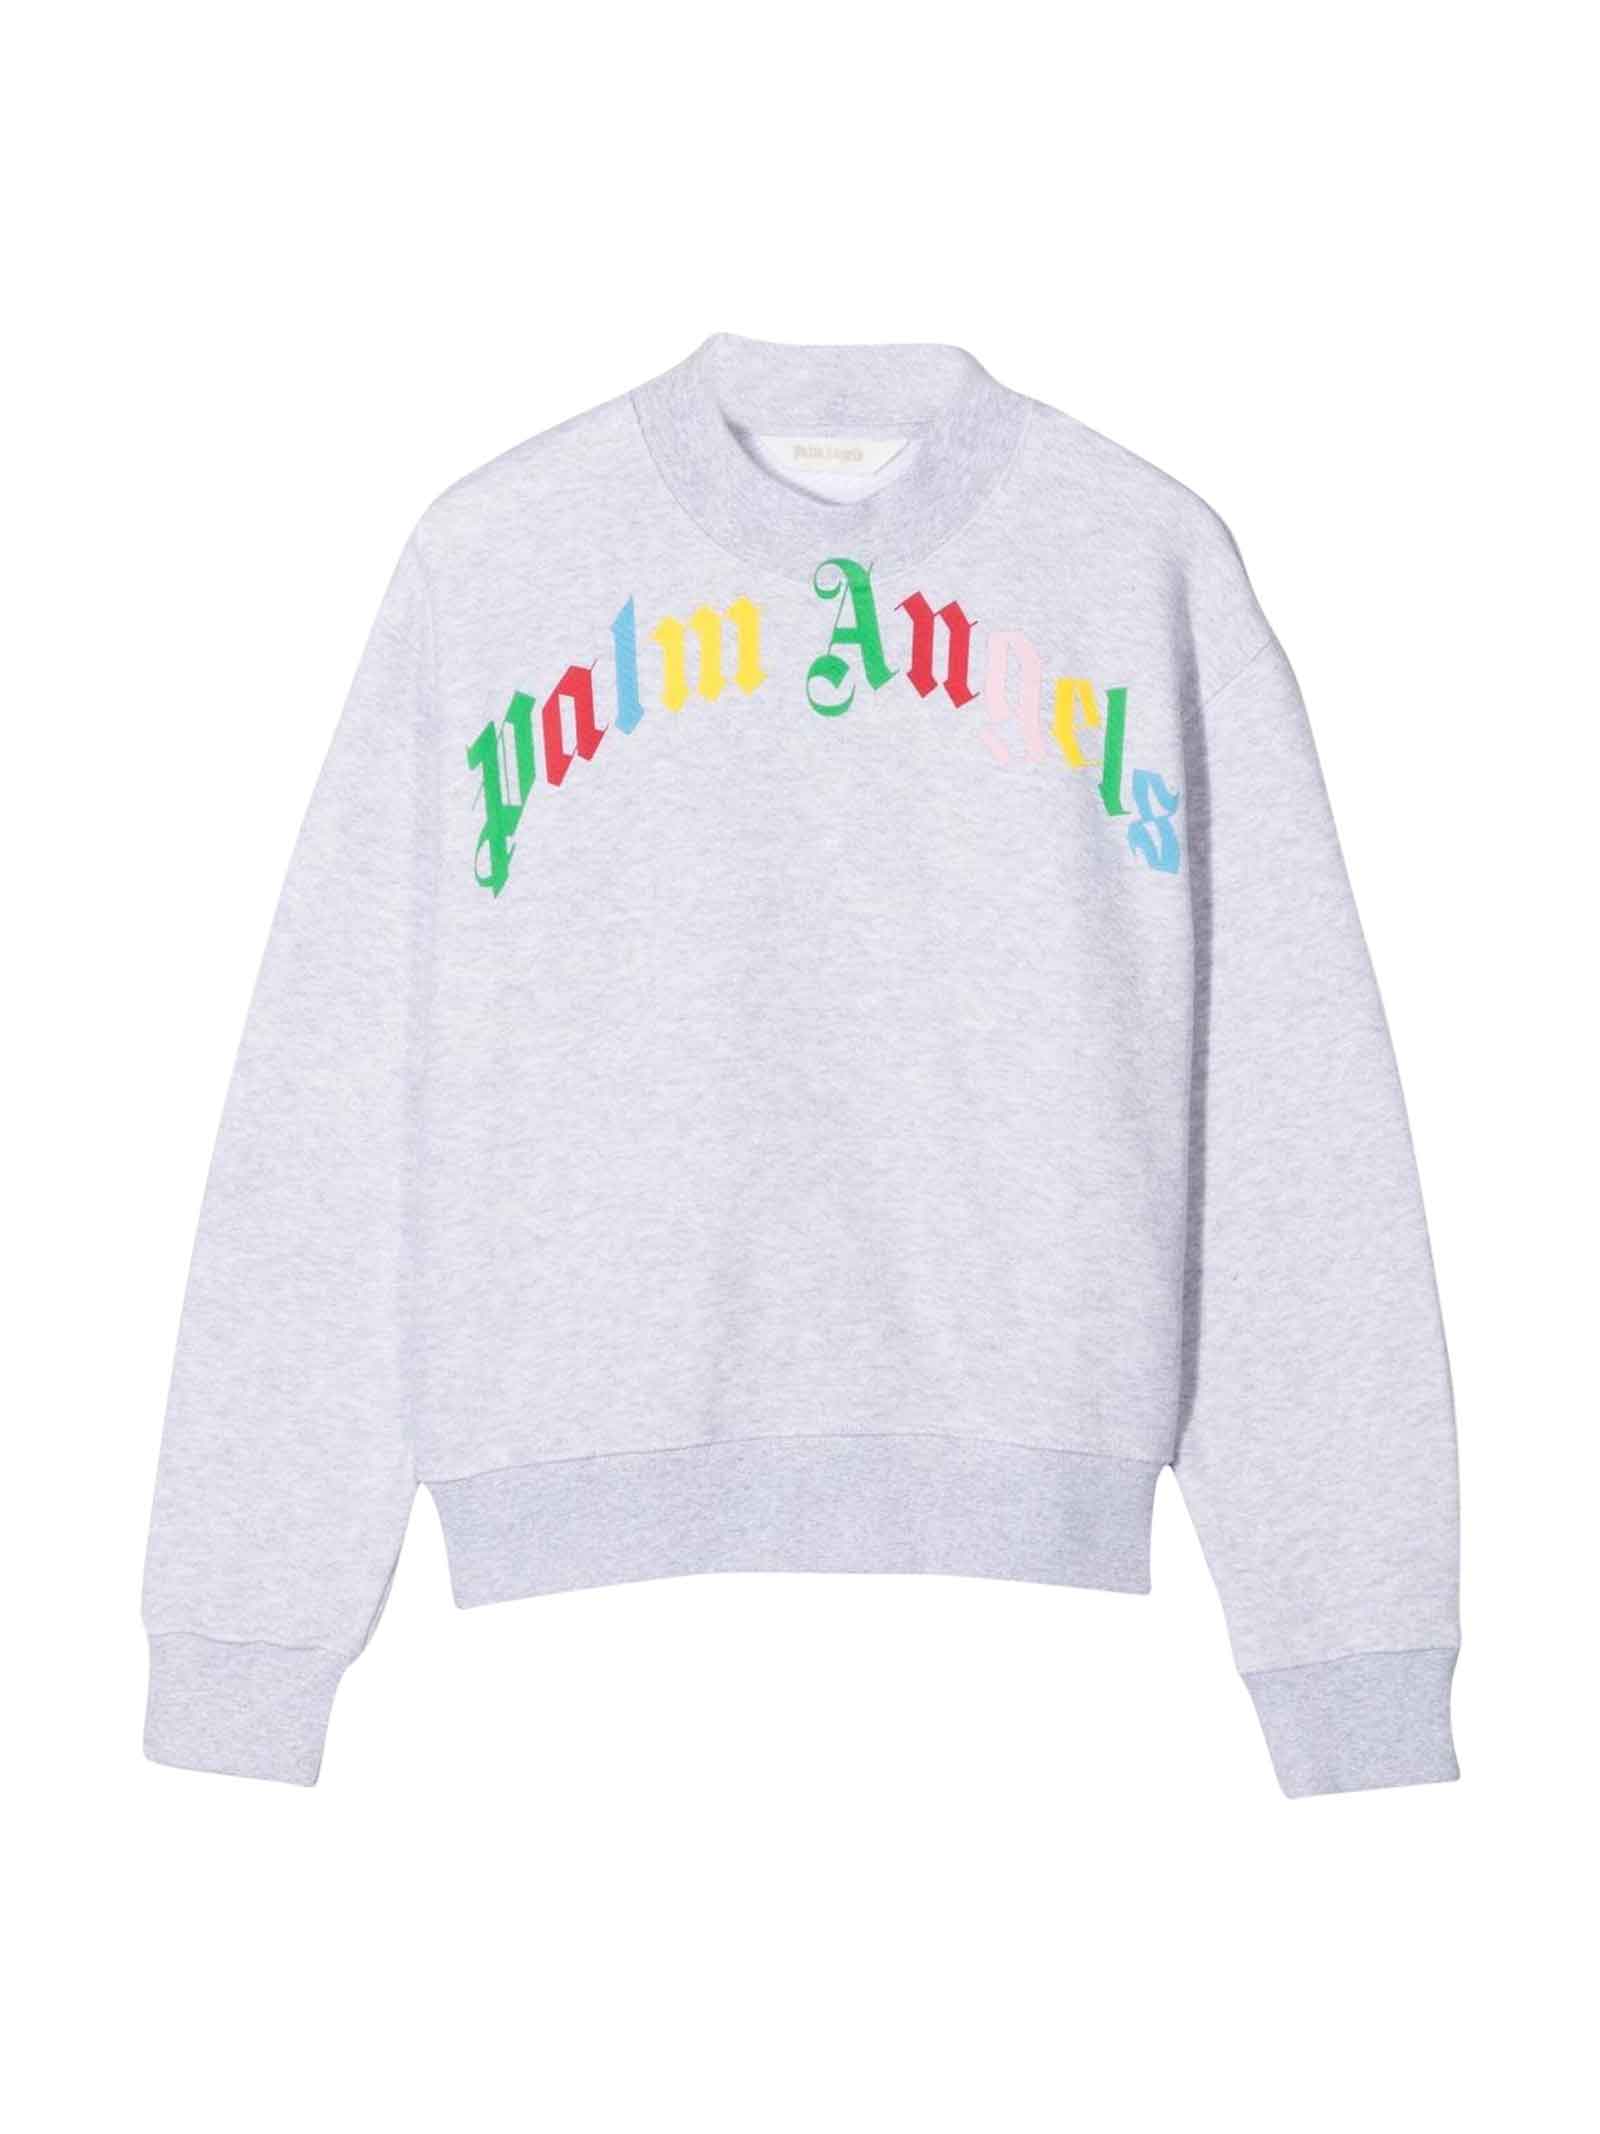 Palm Angels Grey Sweatshirt With Multicolor Print